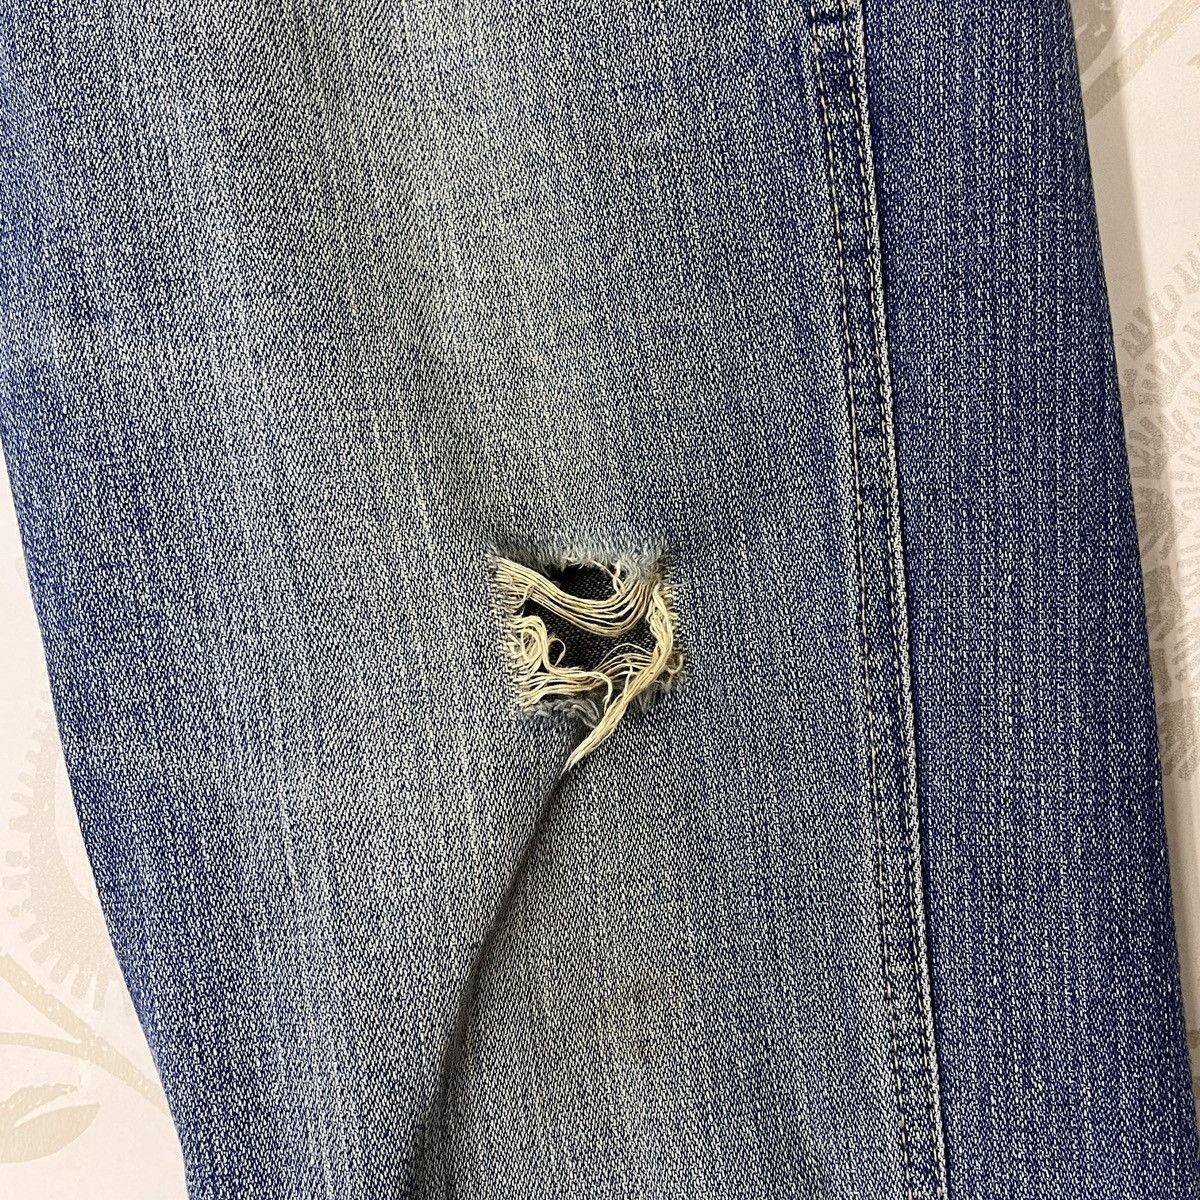 Ripped Three Stones Throw Denim Jeans Avant Garde Pockets - 12